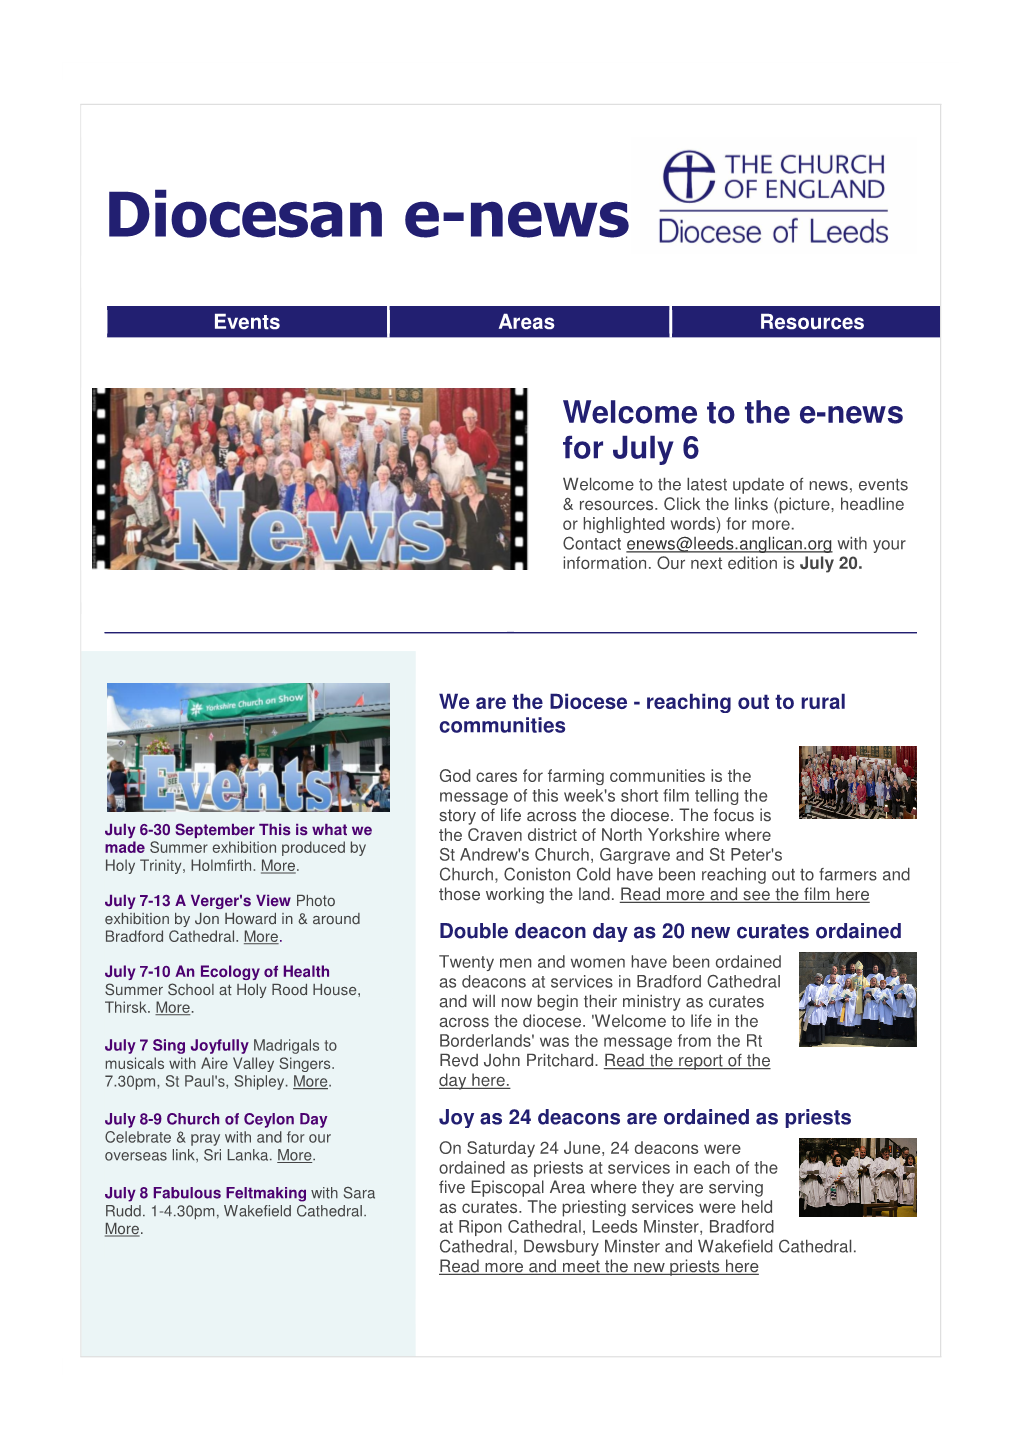 Diocesan E-News